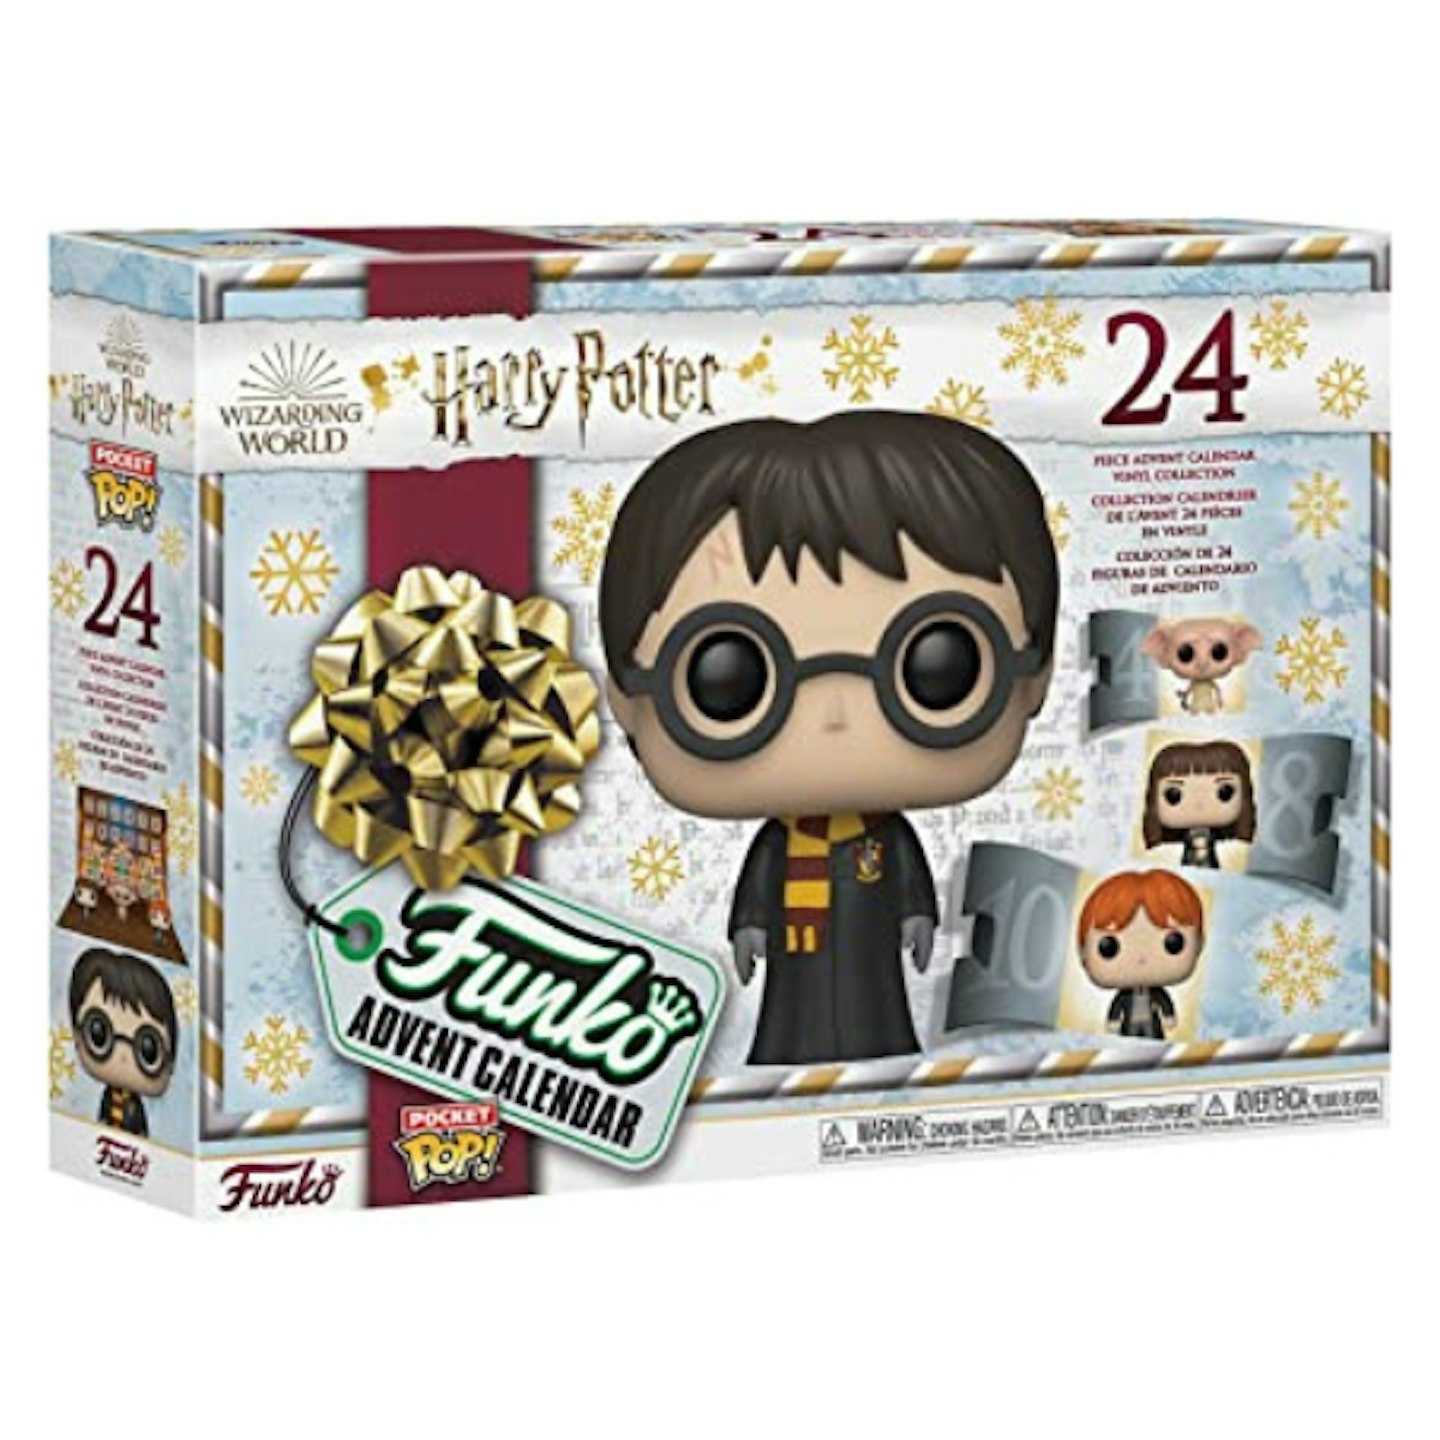 Funko POP Christmas Advent Calendar: Harry Potter With 24 Days of Surprise Pocket POP!